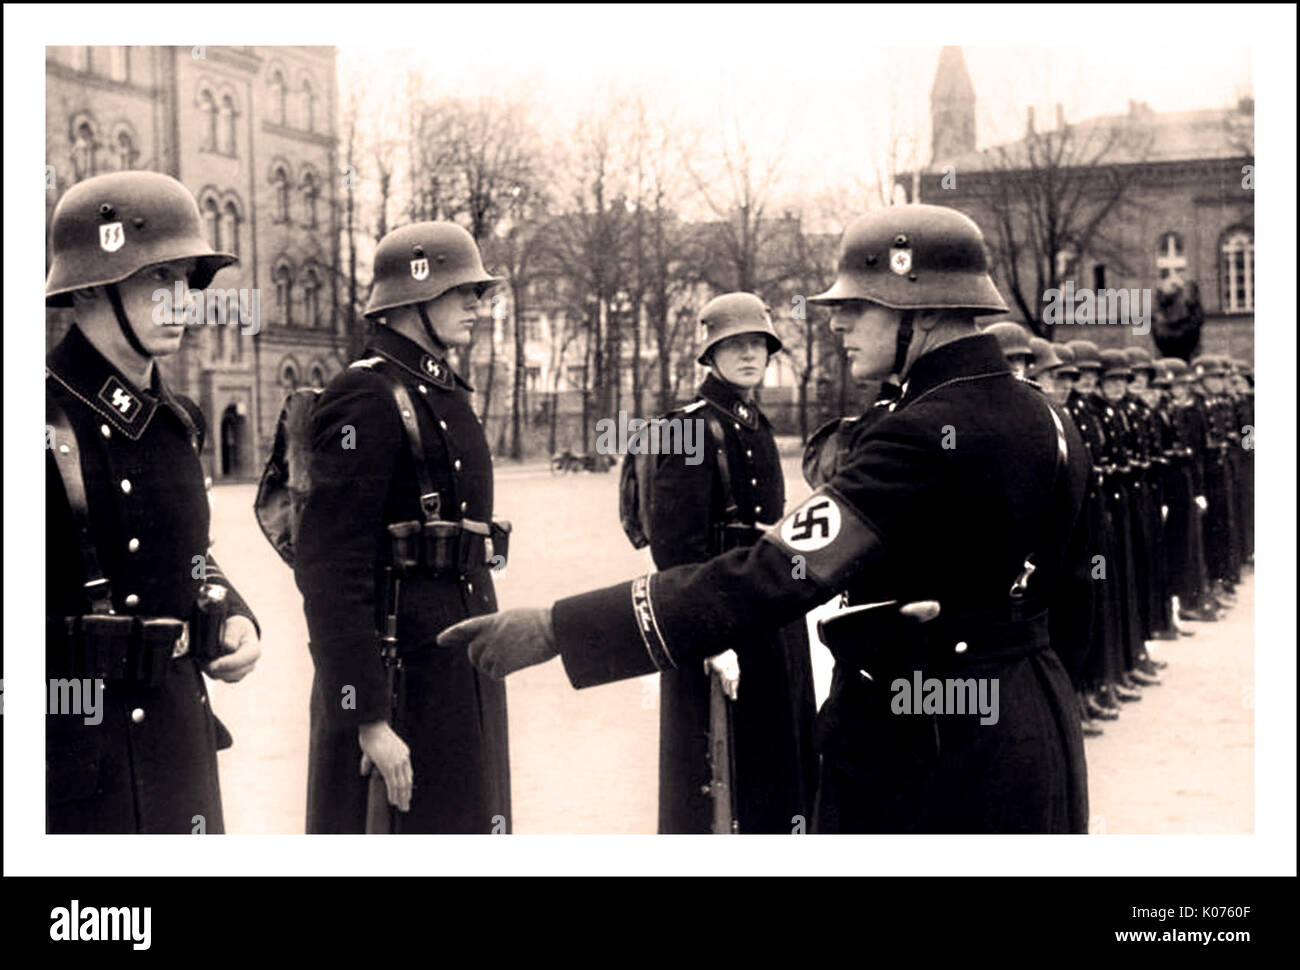 LEIBSTANDARTE PARADE Vintage pre-WW2 black and white photo of men of Leibstandarte 'Adolf Hitler' WAFFEN SS troops at the Lichterfelde barracks in Berlin, Germany, November 22, 1938. Stock Photo